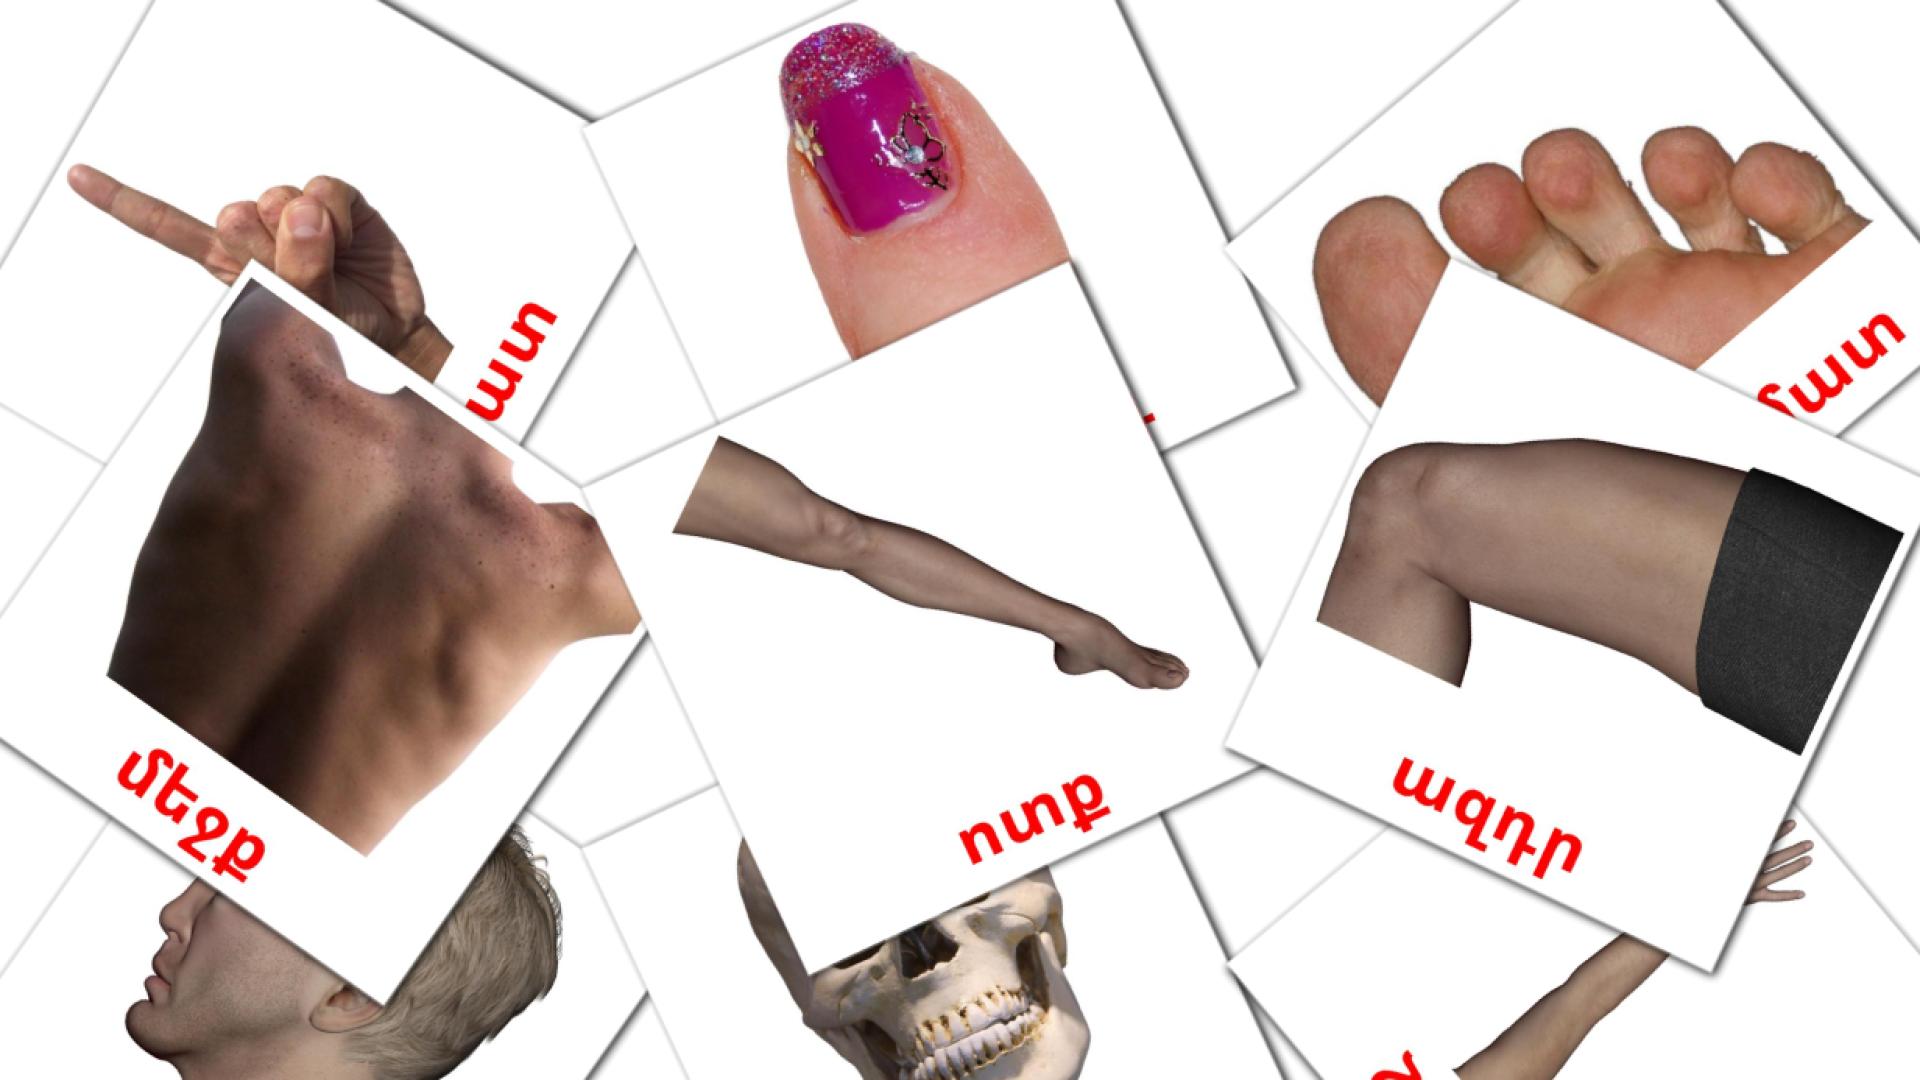 Body Parts - armenian vocabulary cards